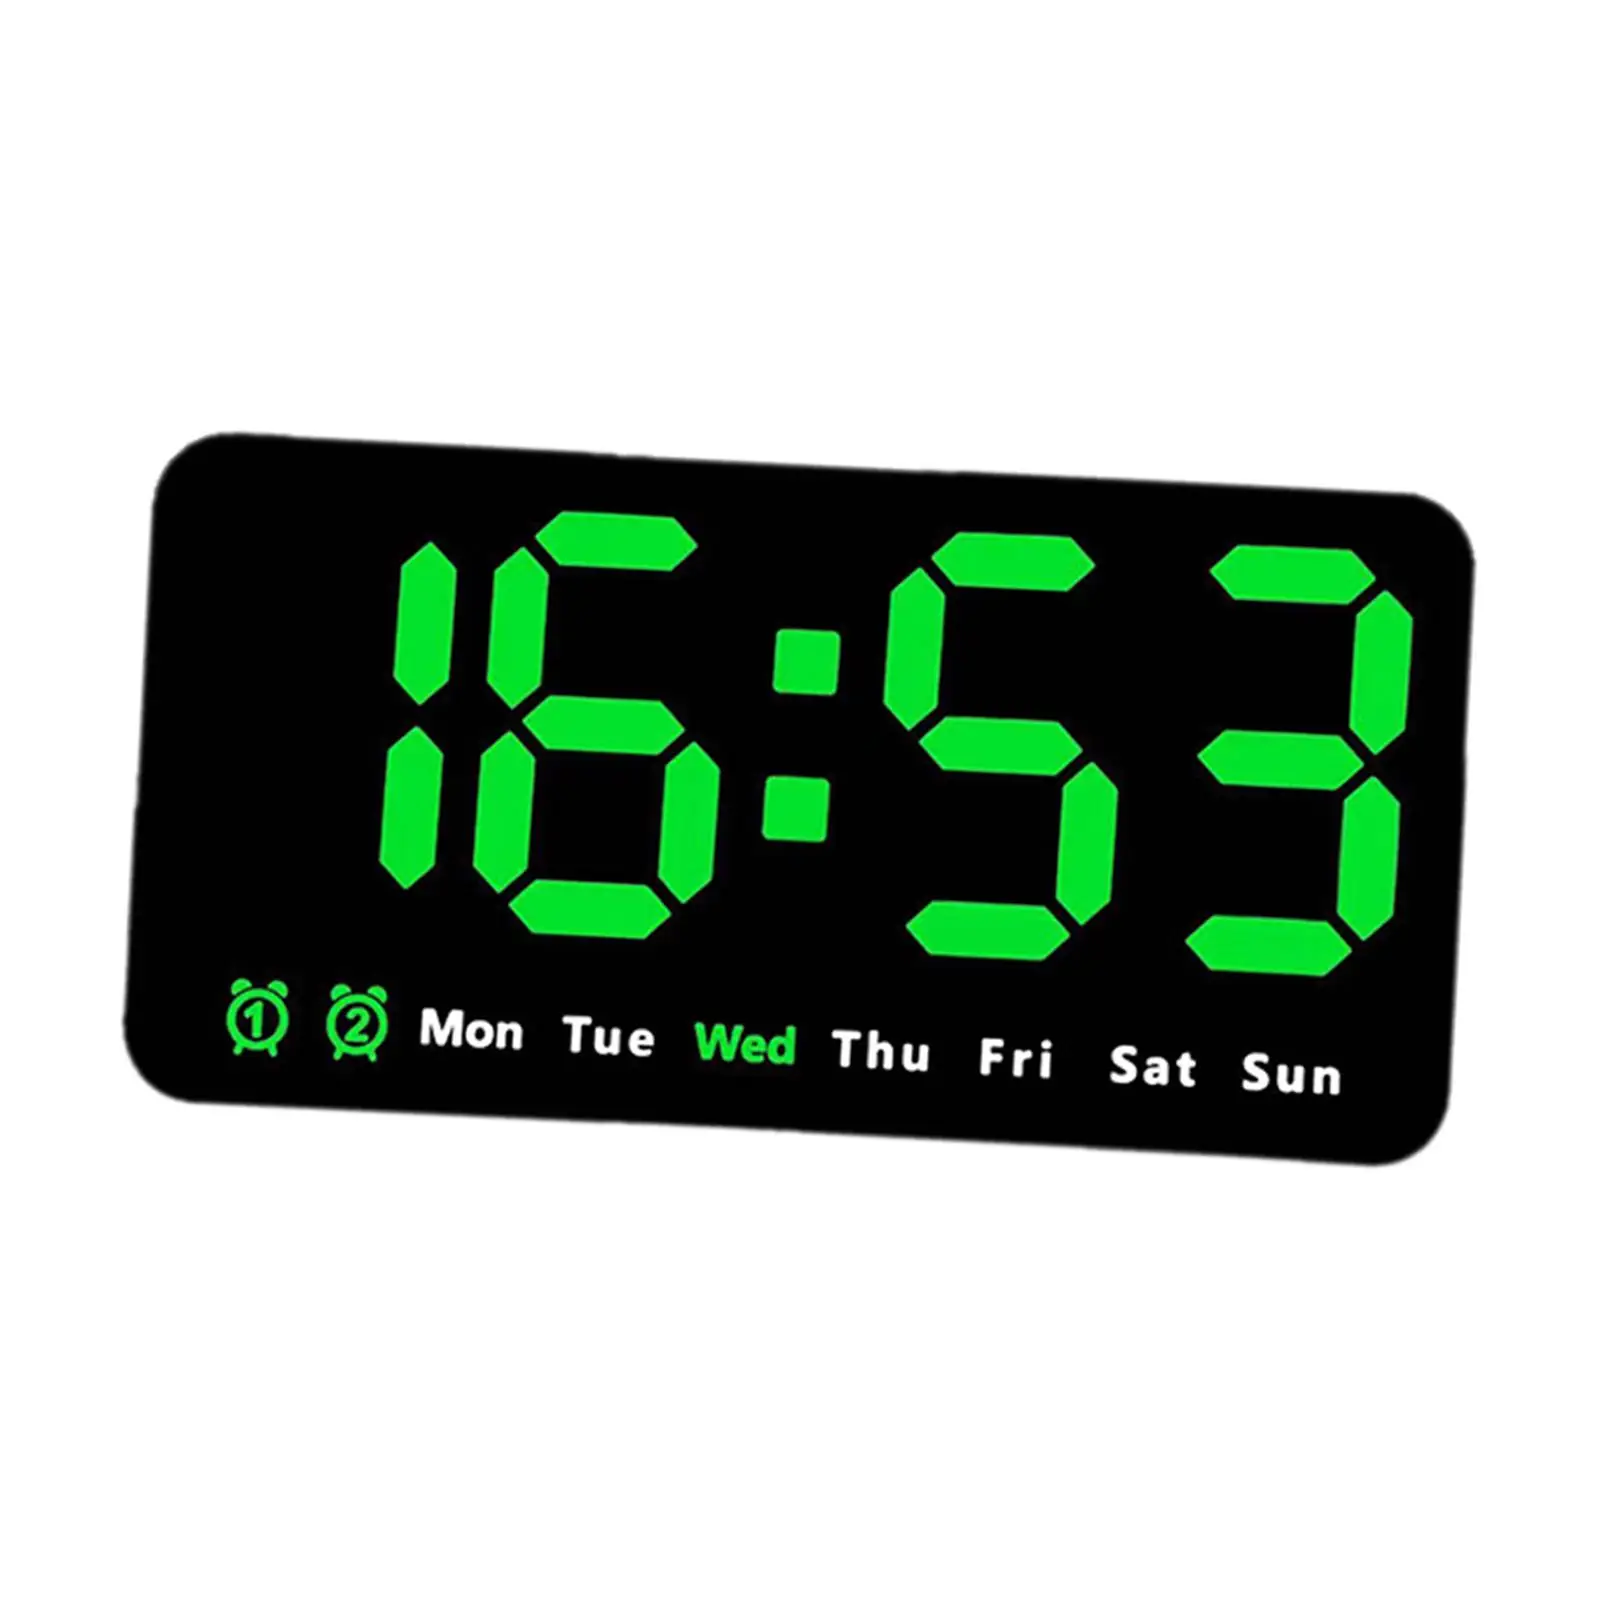 LED Desktop Alarm Clock with Day and Date Table Voice Desk Digital Clock for Bedroom Adult Beside Living Room Teens